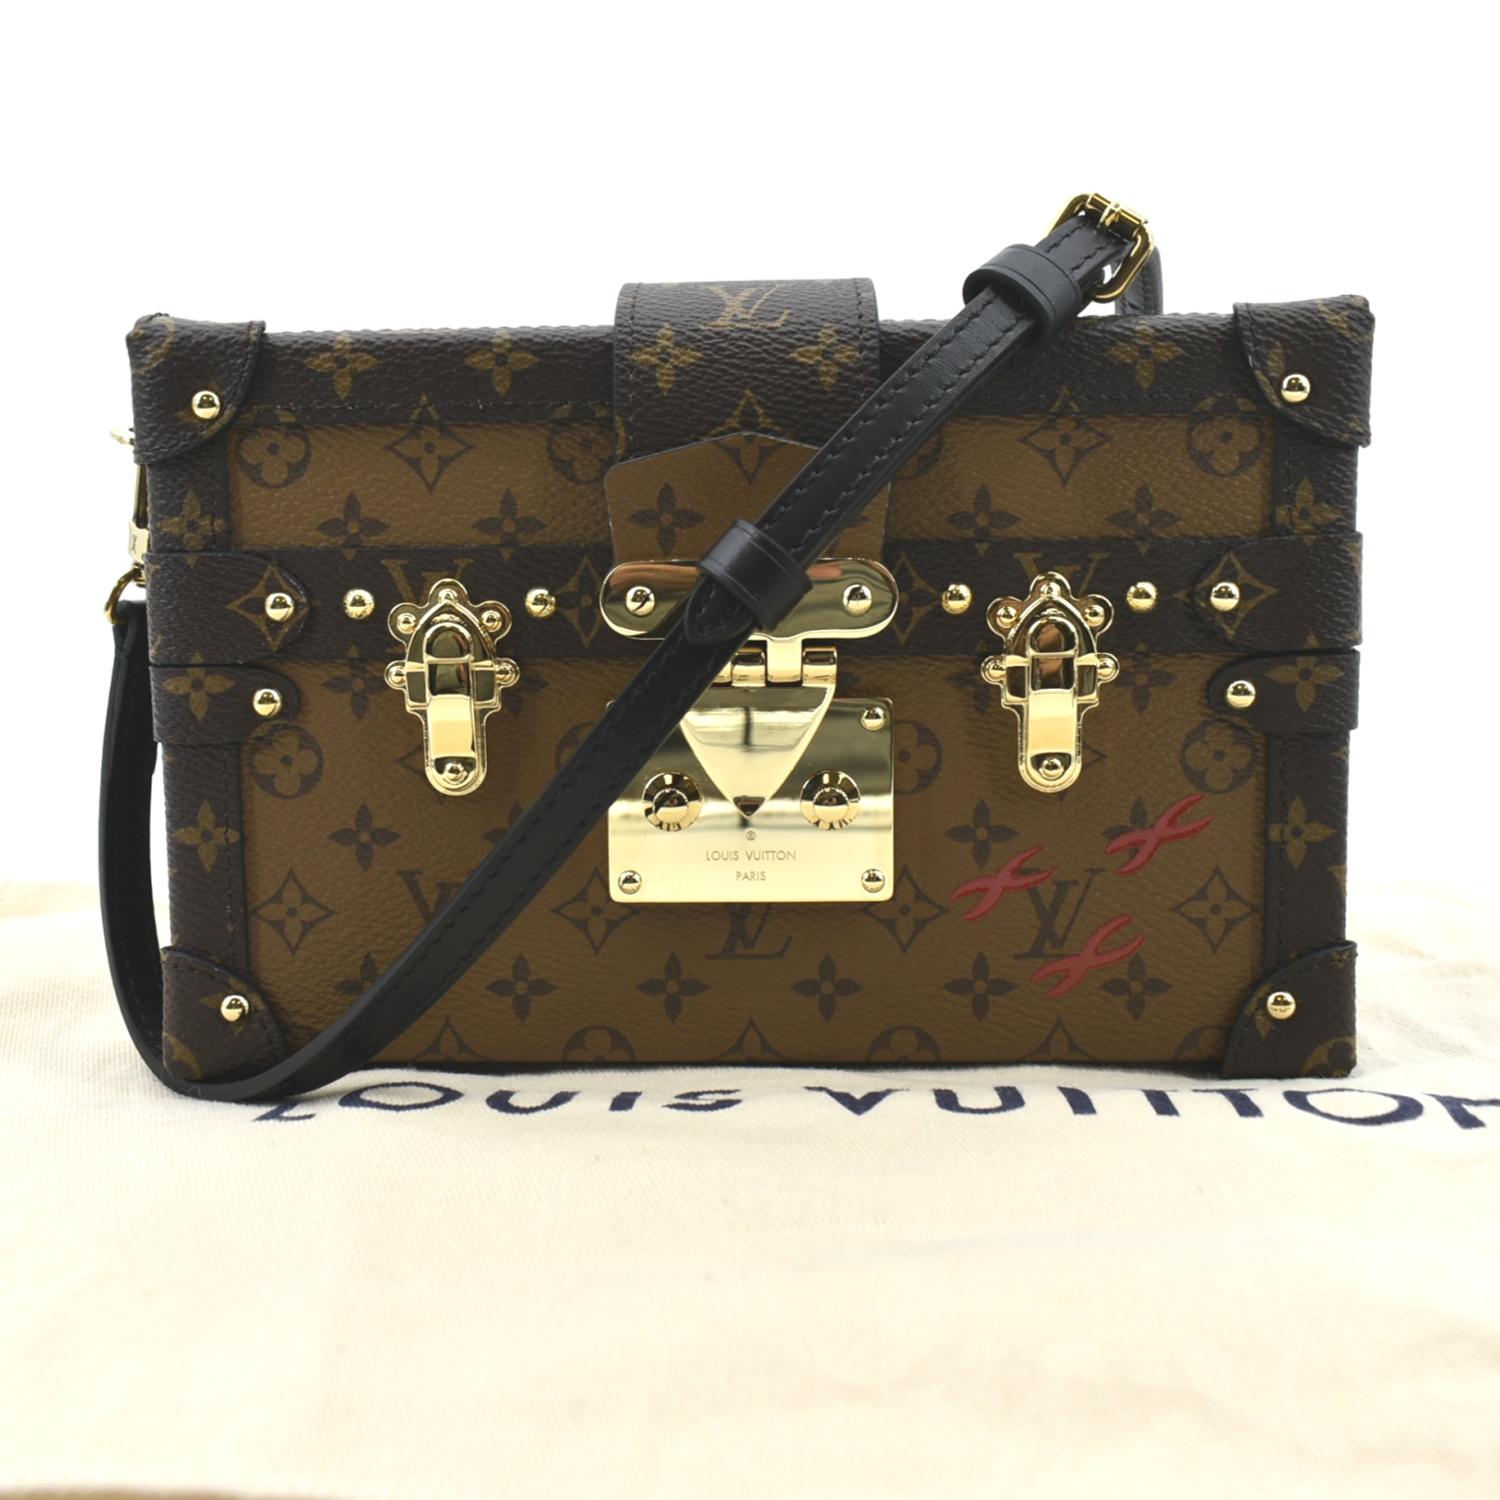 Petite Malle Monogram - Women - Handbags